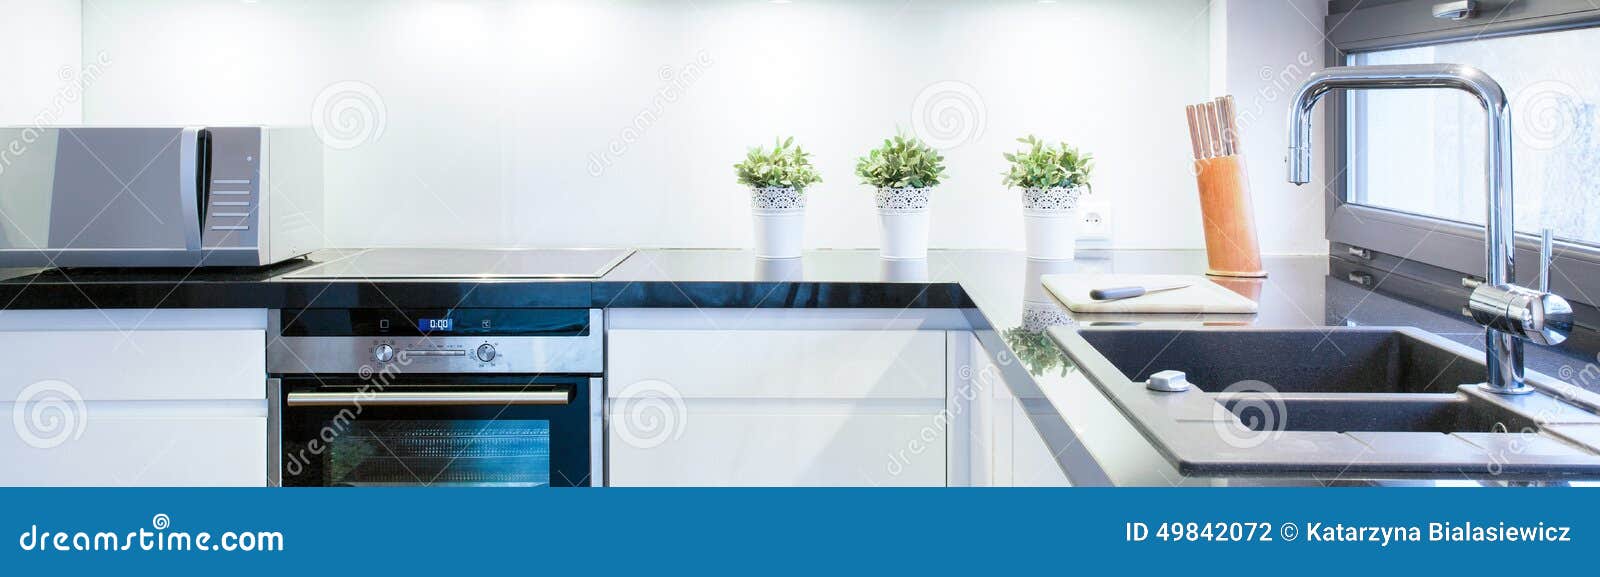 https://thumbs.dreamstime.com/z/black-white-kitchen-view-interior-49842072.jpg